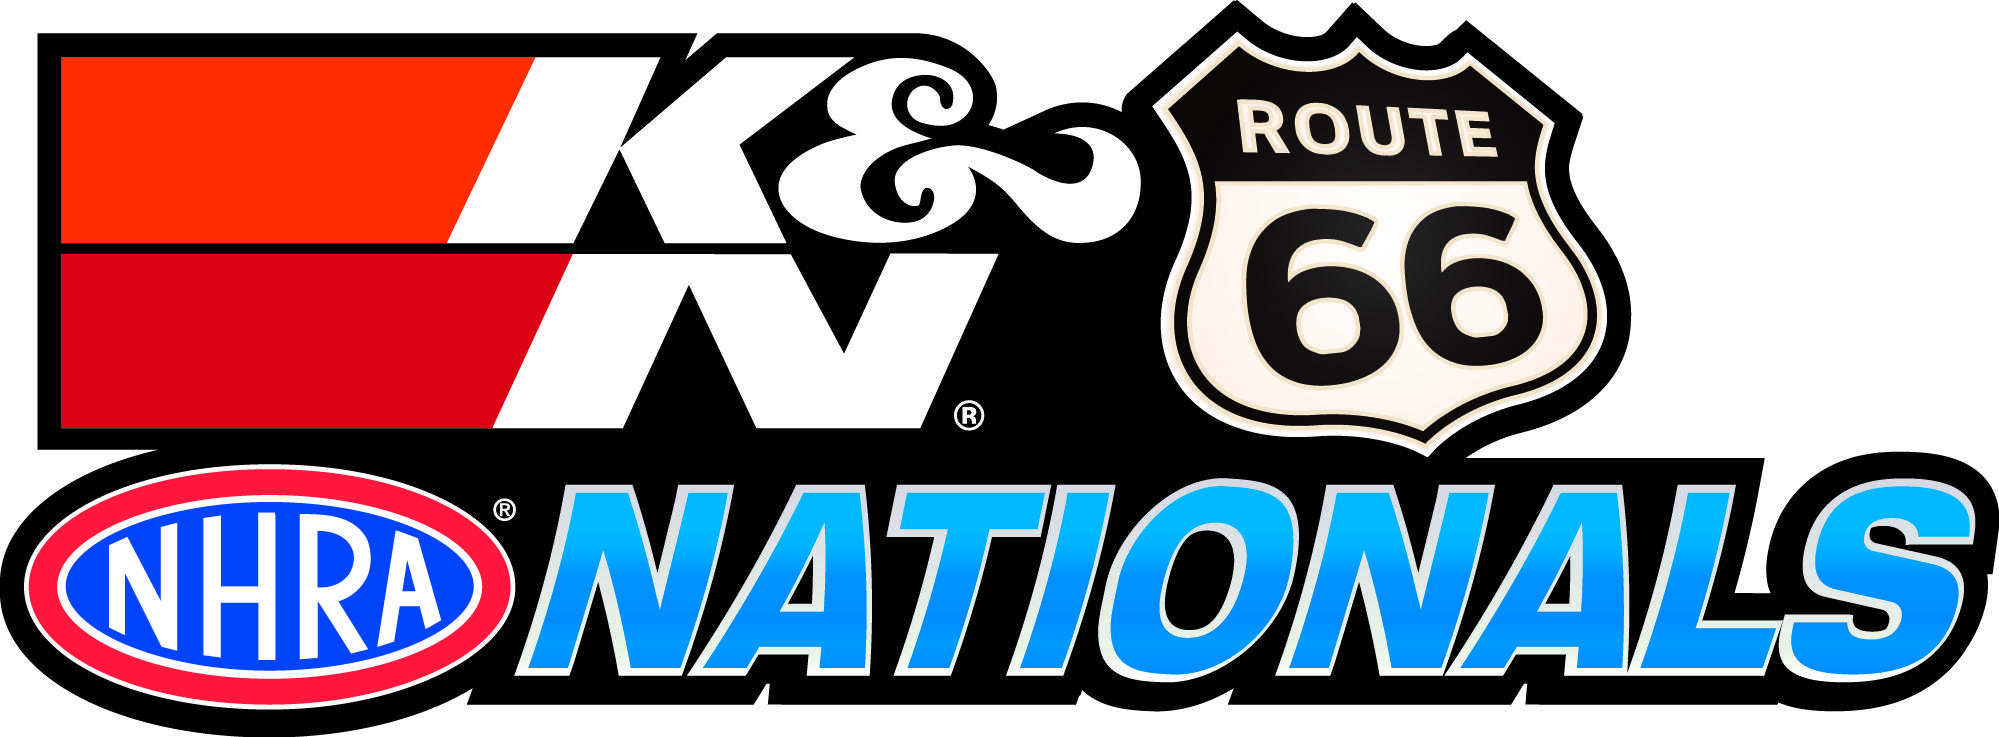 NHRA Logo - NHRA K&N Route 66 Nationals Logo